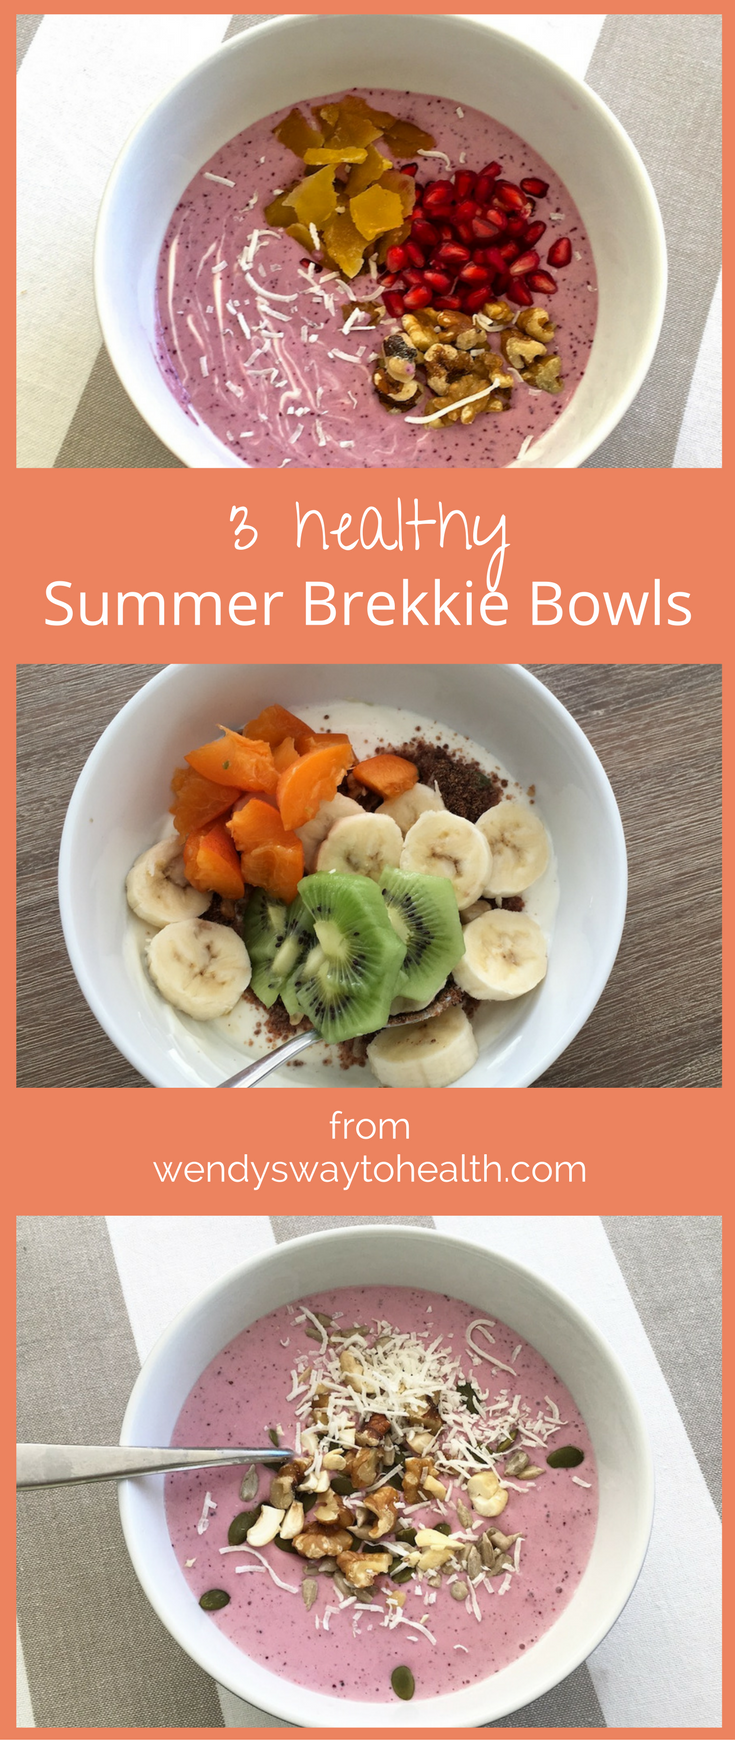 Wendy's Way healthy summer brekkie bowls ? such a great way to start the day!